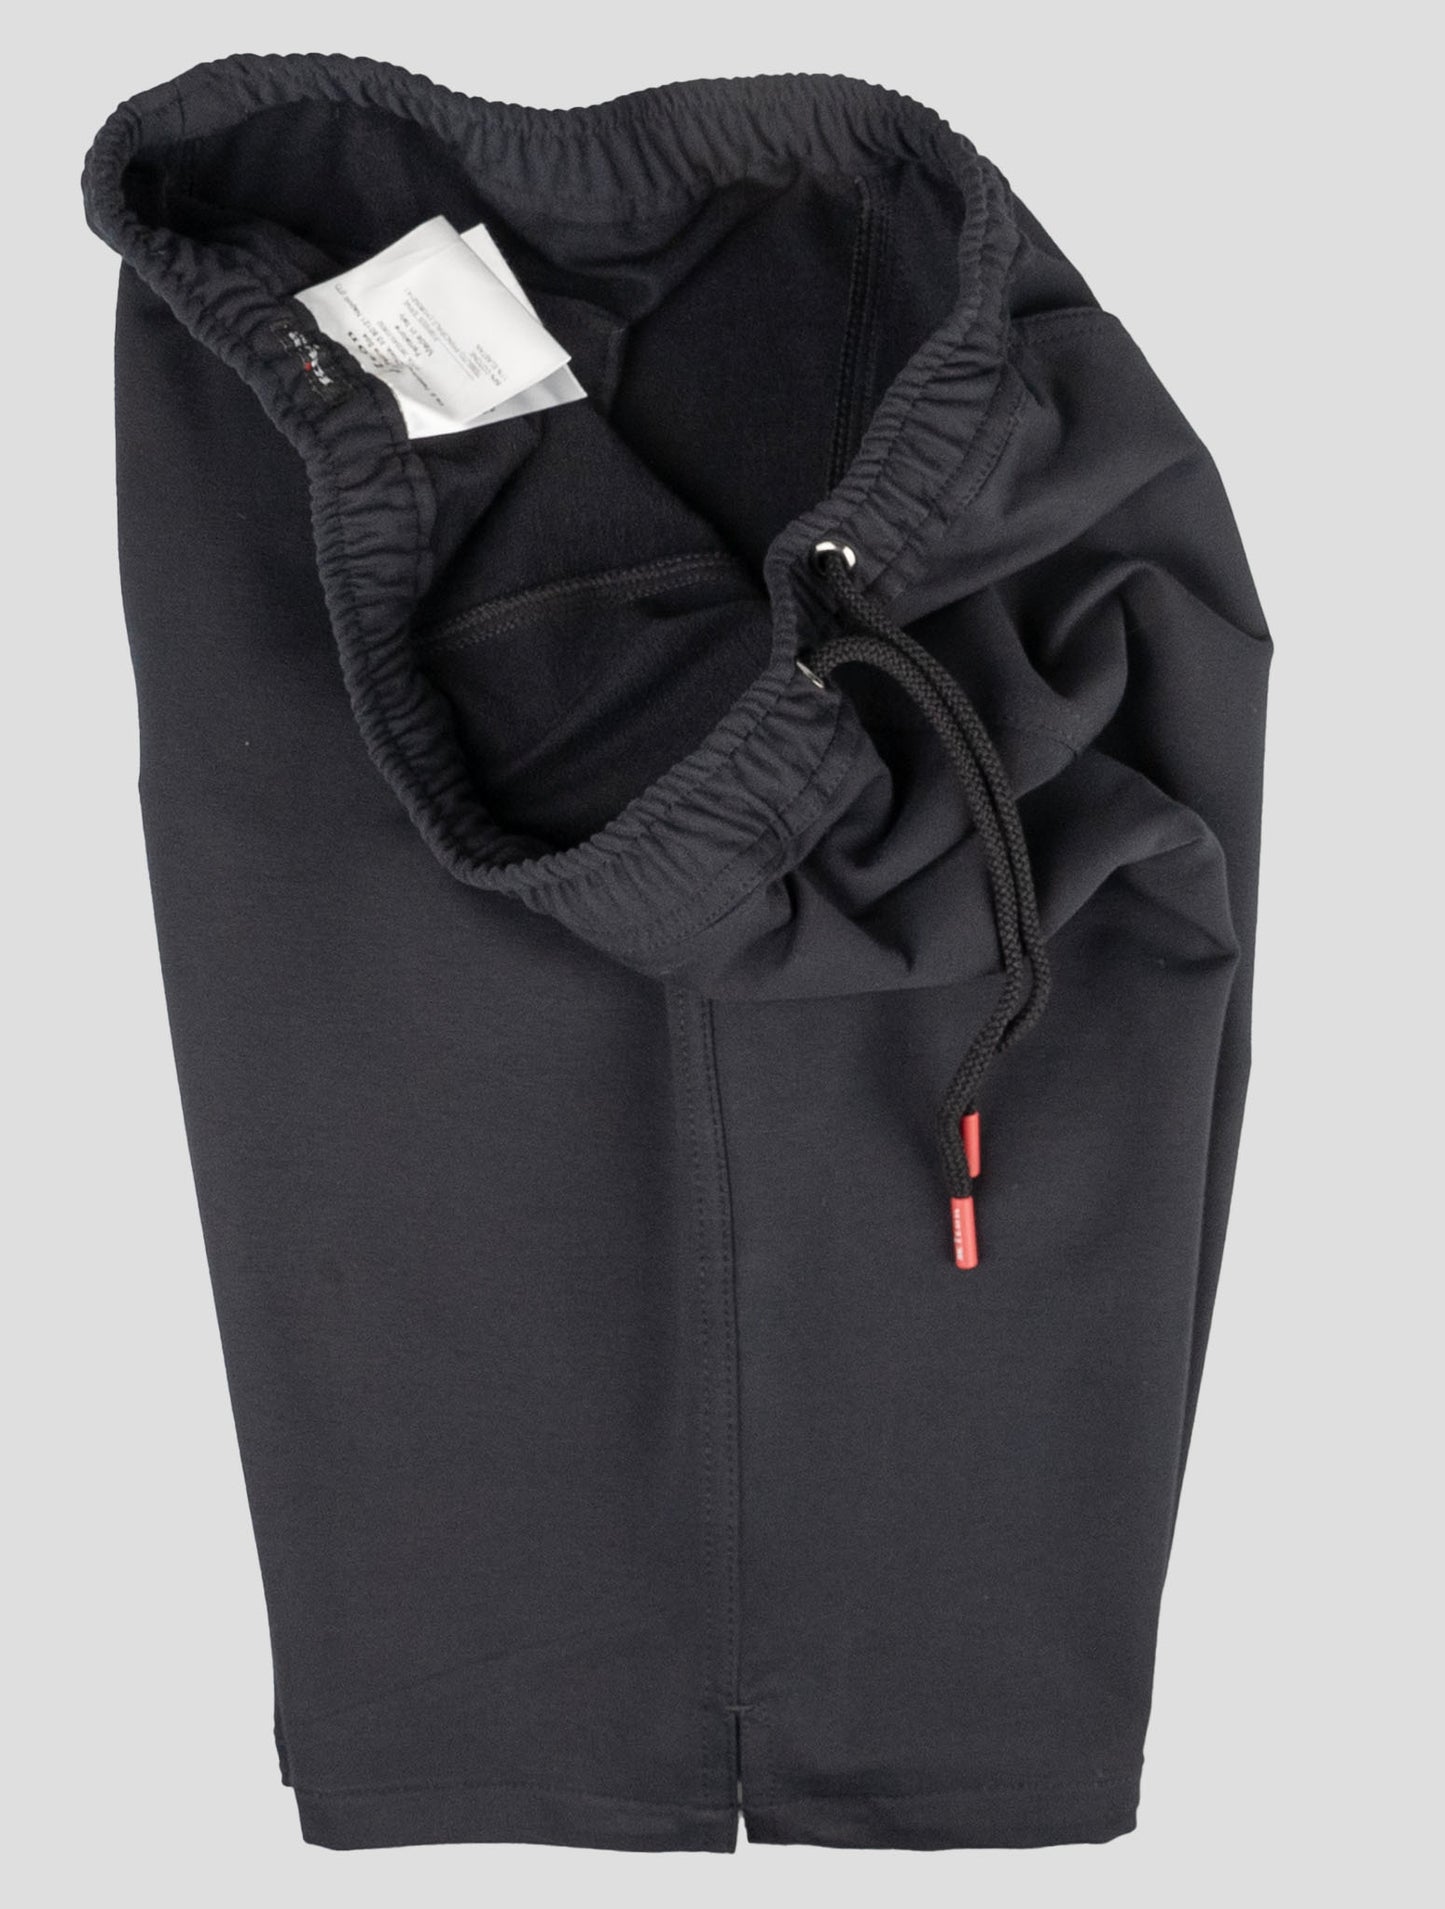 Kiton Matching Outfit - Gray Mariano and Black Short Pants Tracksuit